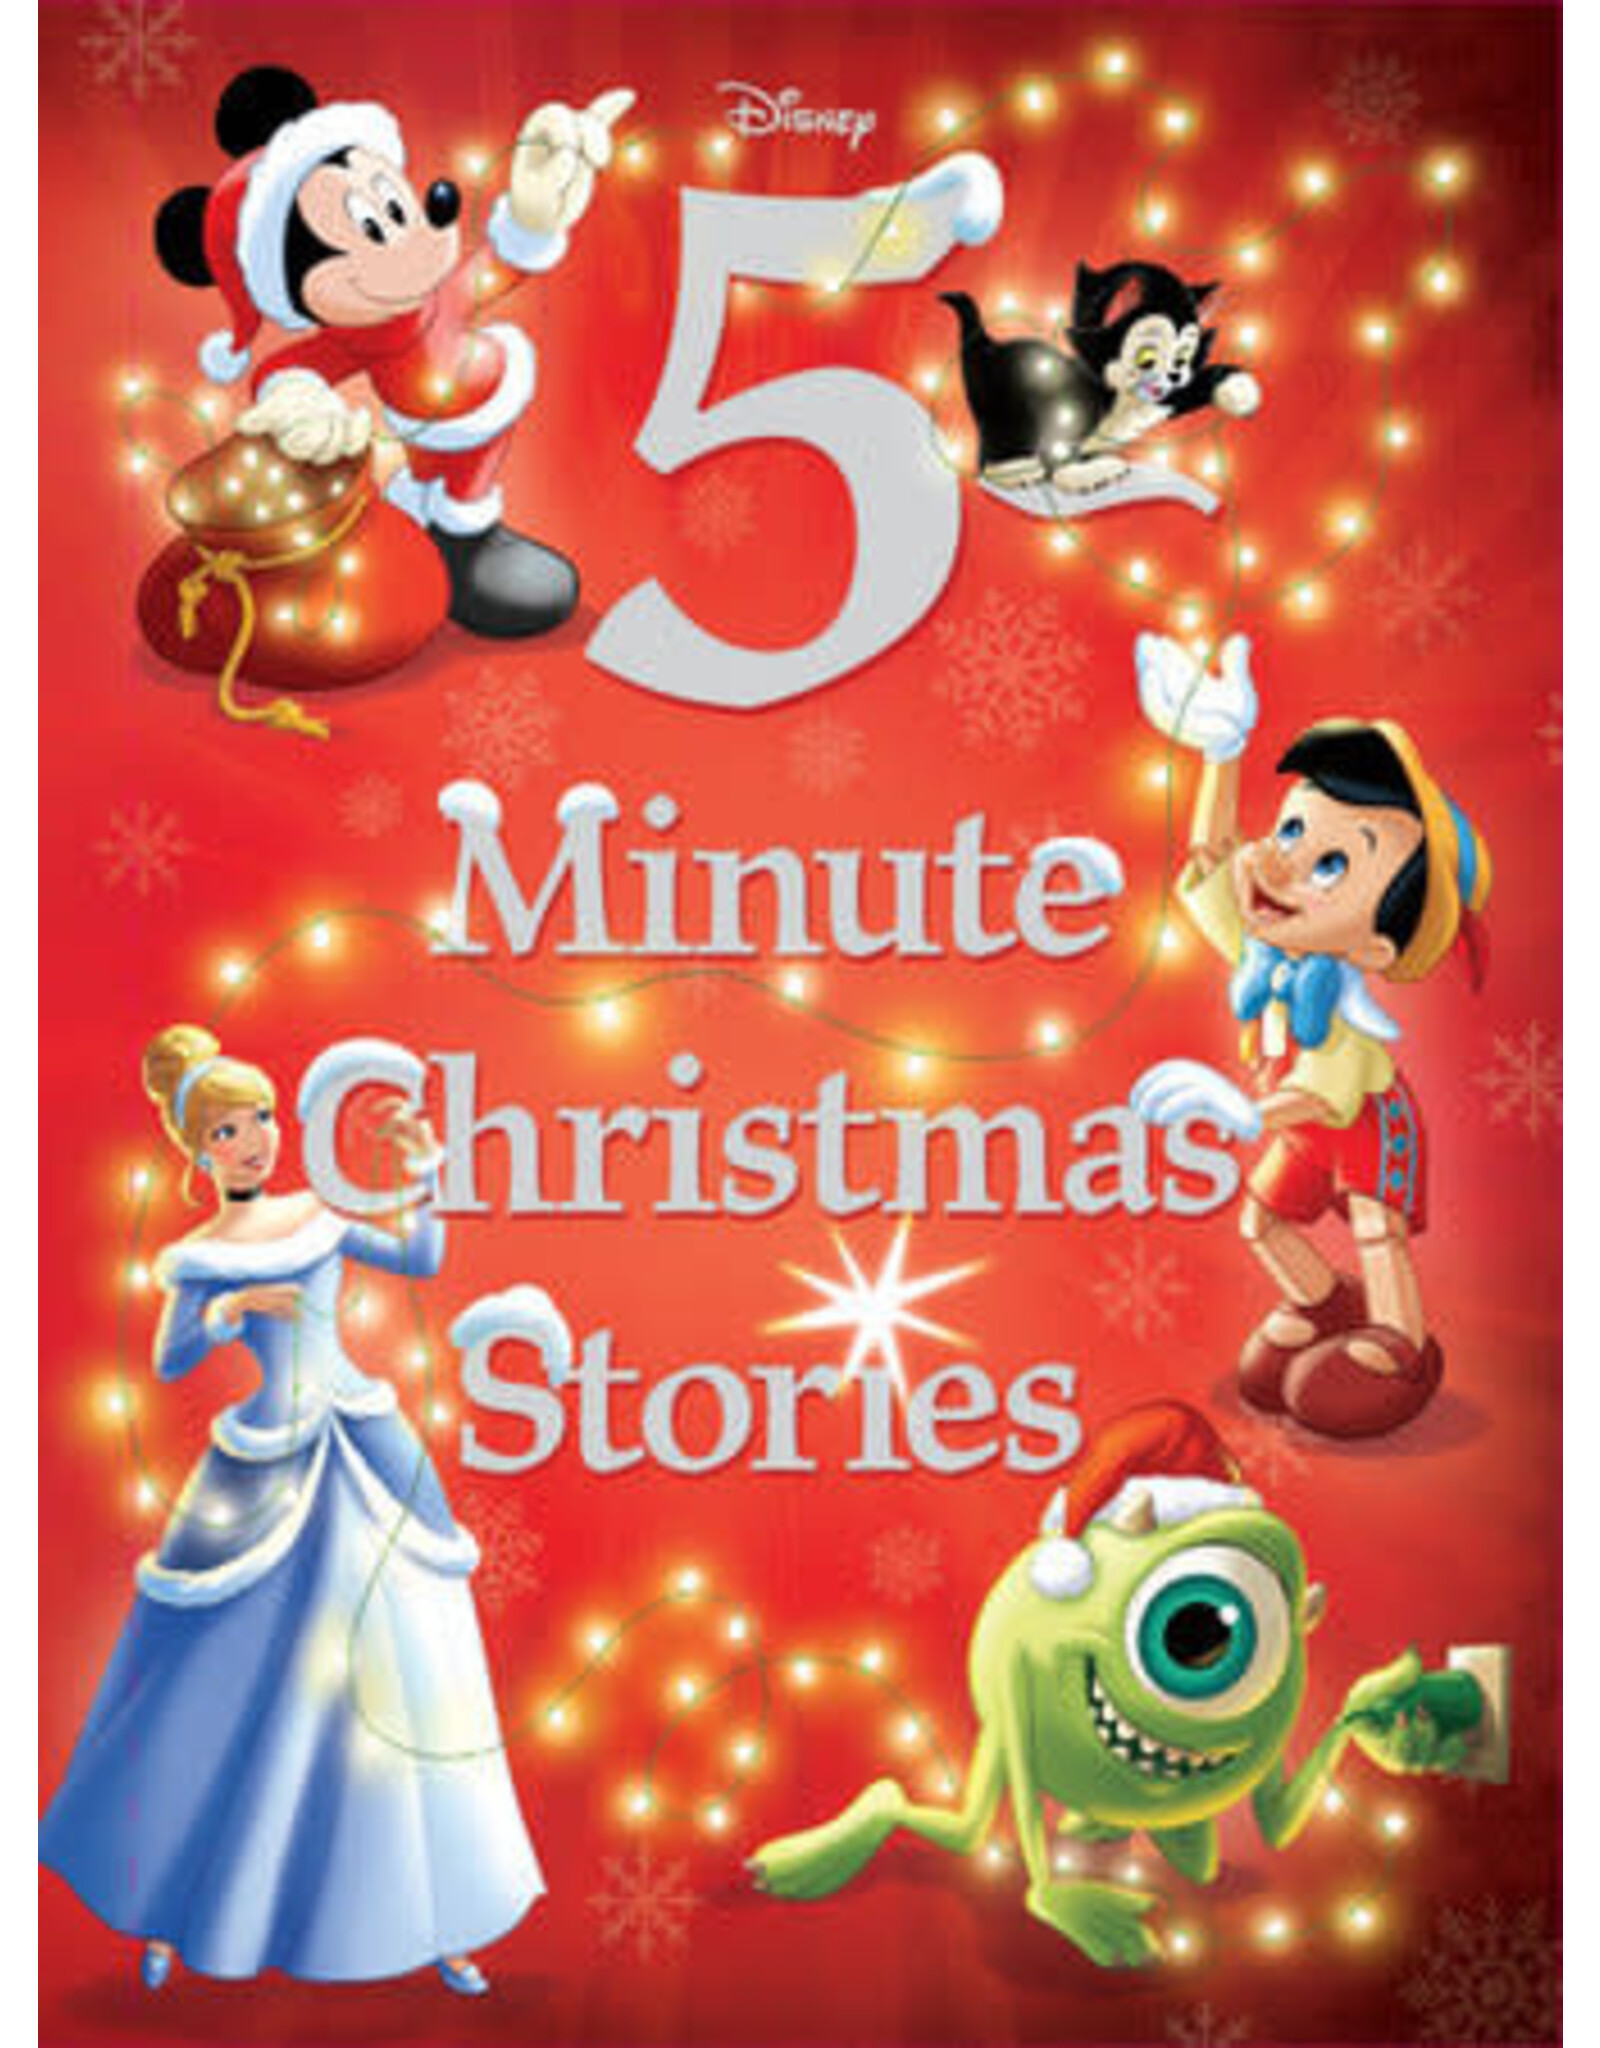 Disney: 5-Minute Christmas Stories